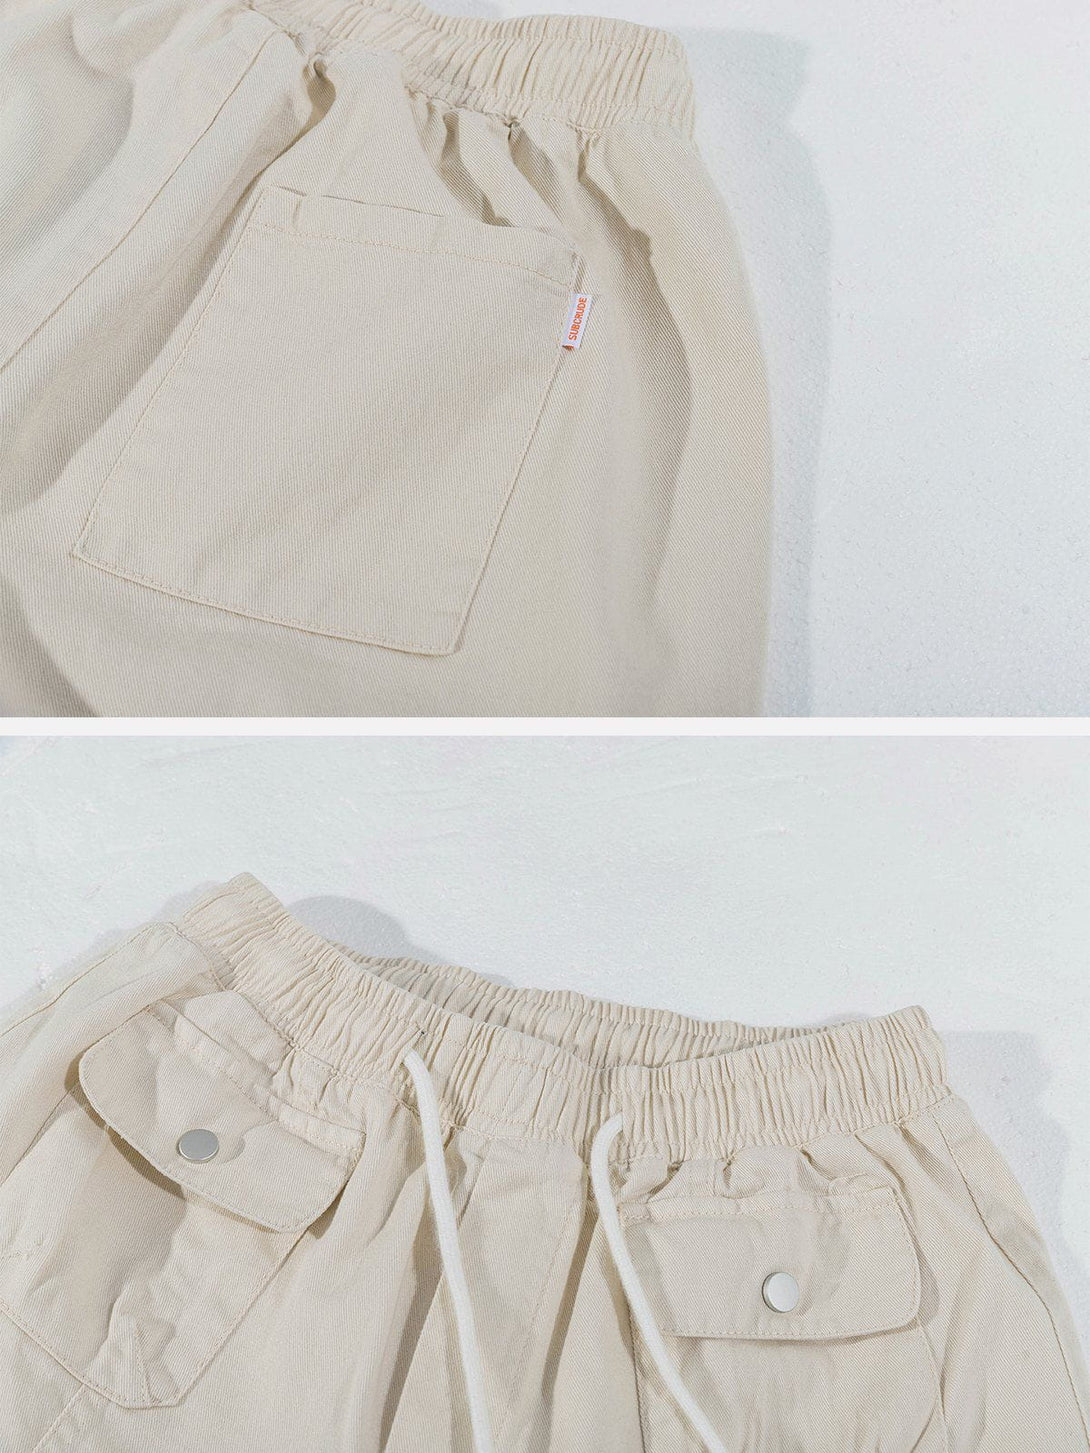 Majesda® - Multi-Pocket Basic Essential Shorts outfit ideas streetwear fashion